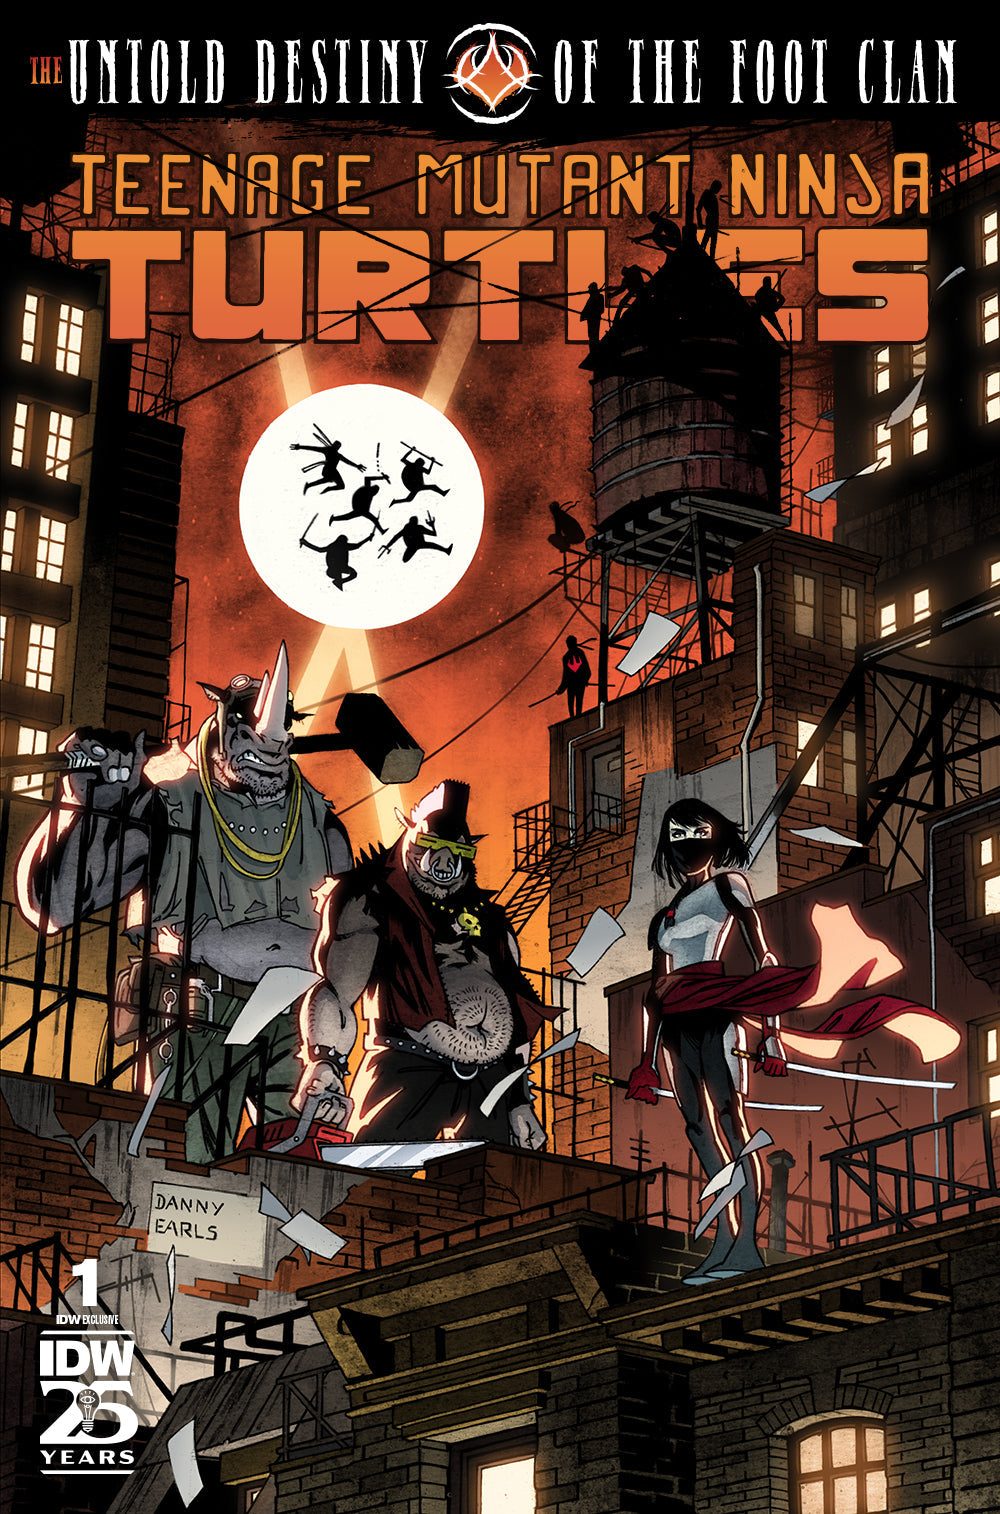 Teenage Mutant Ninja Turtles: The Untold Destiny of the Foot Clan #1 - IDW Exclusive